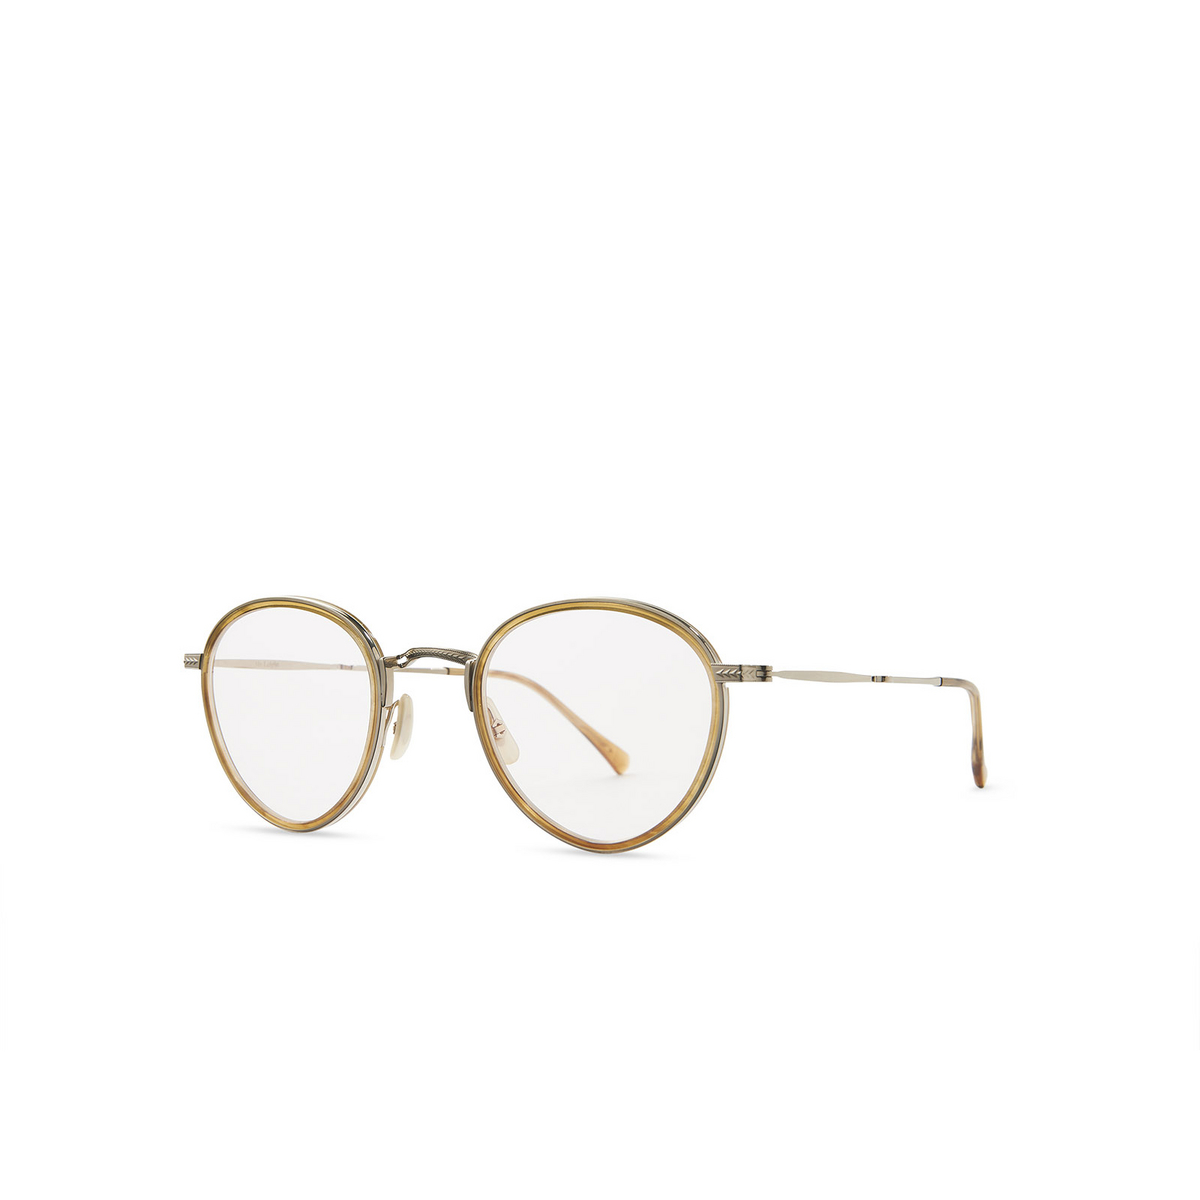 Mr. Leight BRISTOL C Eyeglasses MRRYE-12KG Marbled Rye-12K White Gold - three-quarters view